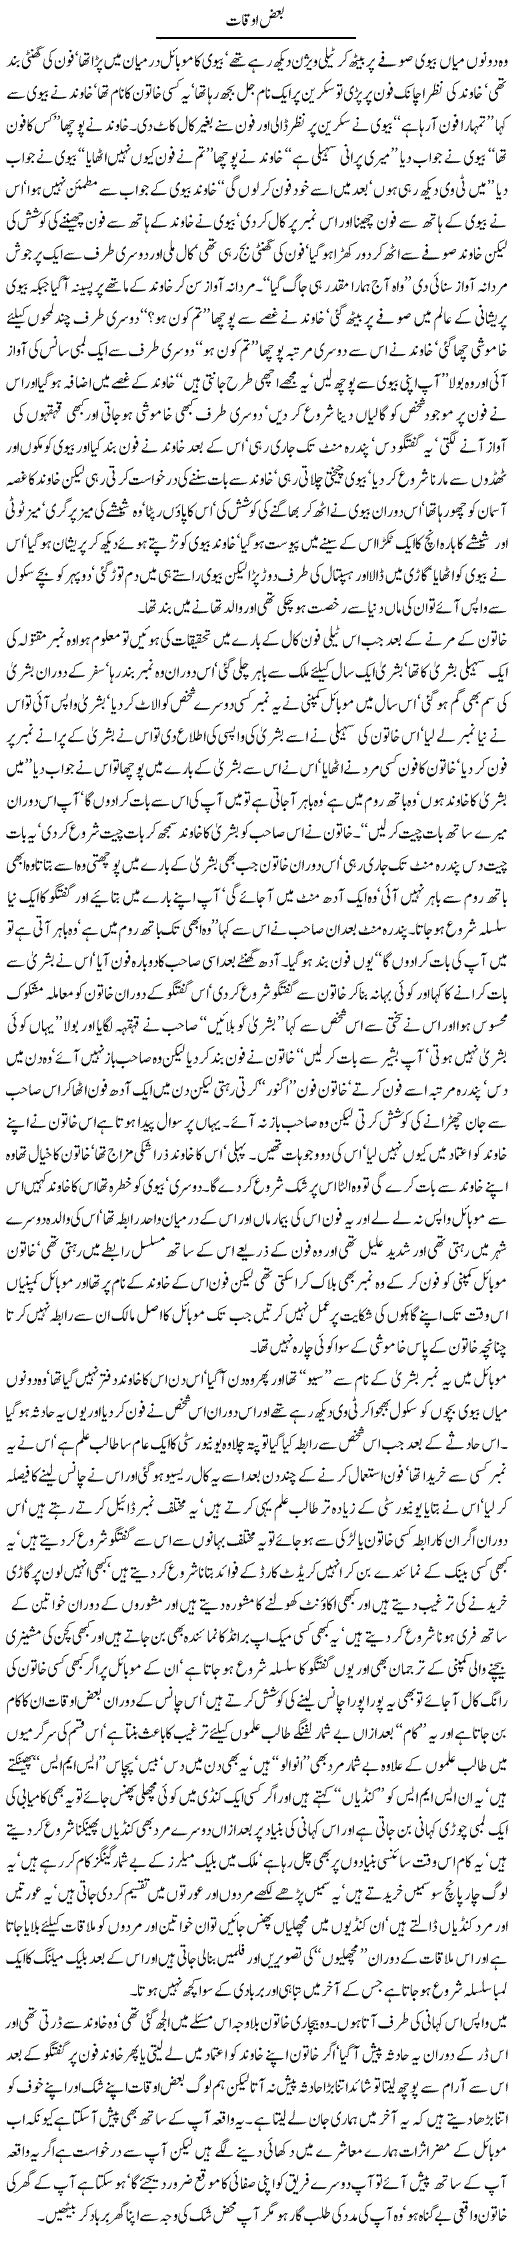 Sometimes Express Column Javed Chaudhry 12 December 2010